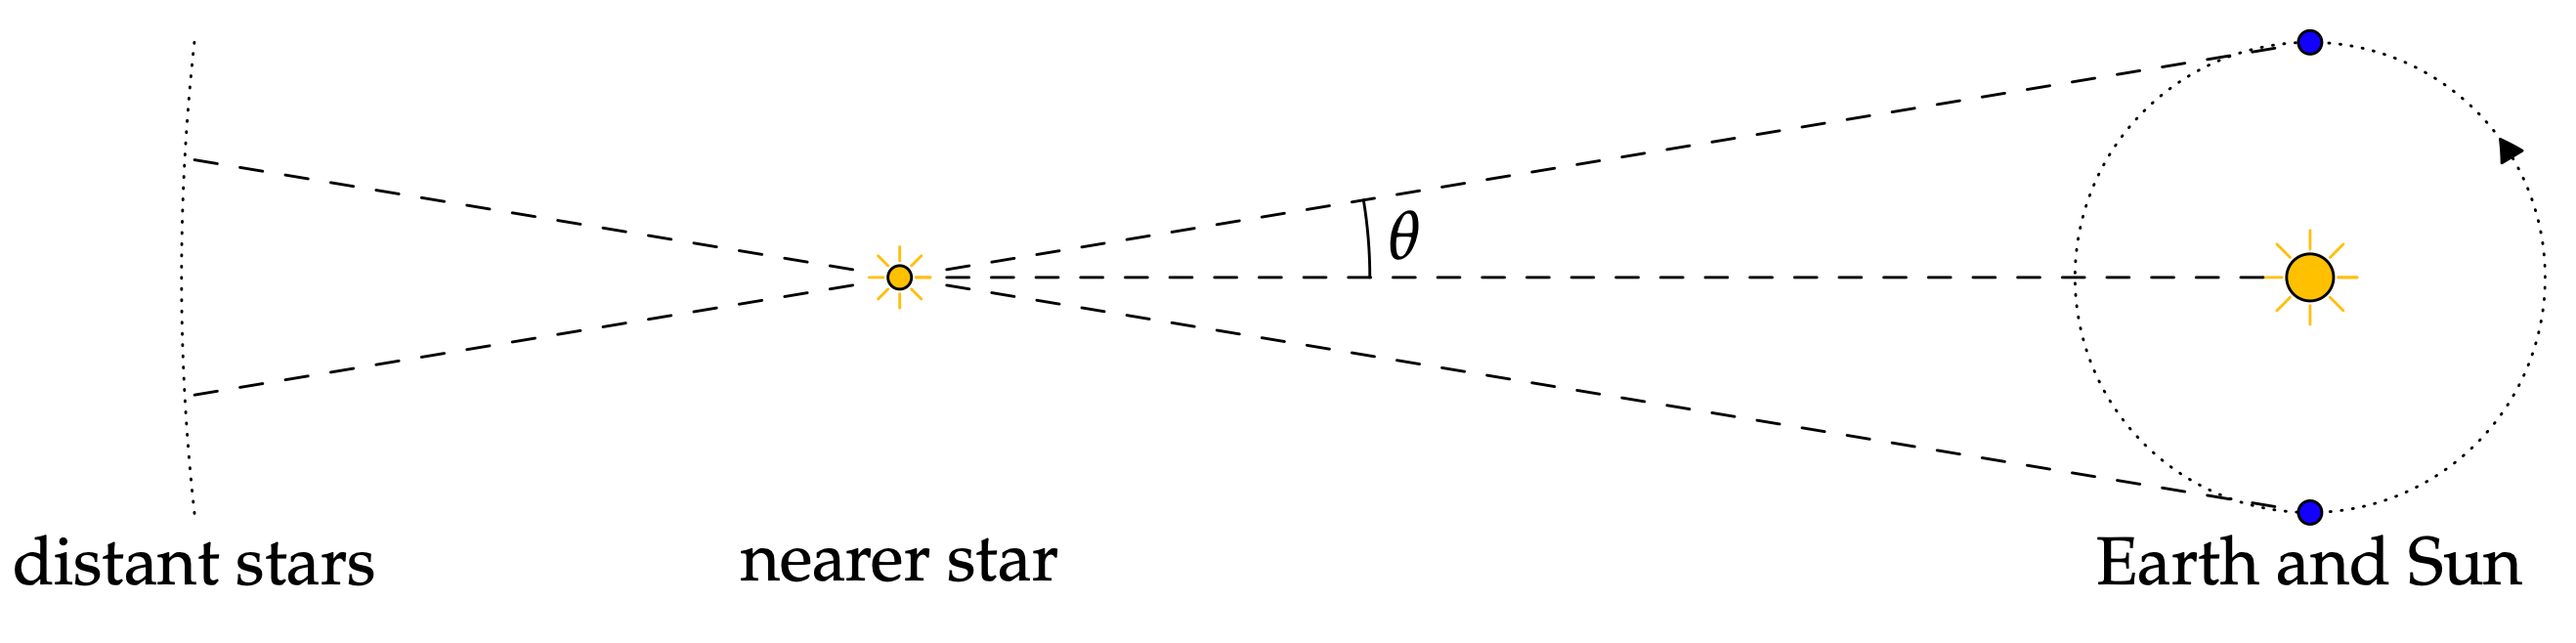 astronomy example - image by www.math.uci.edu